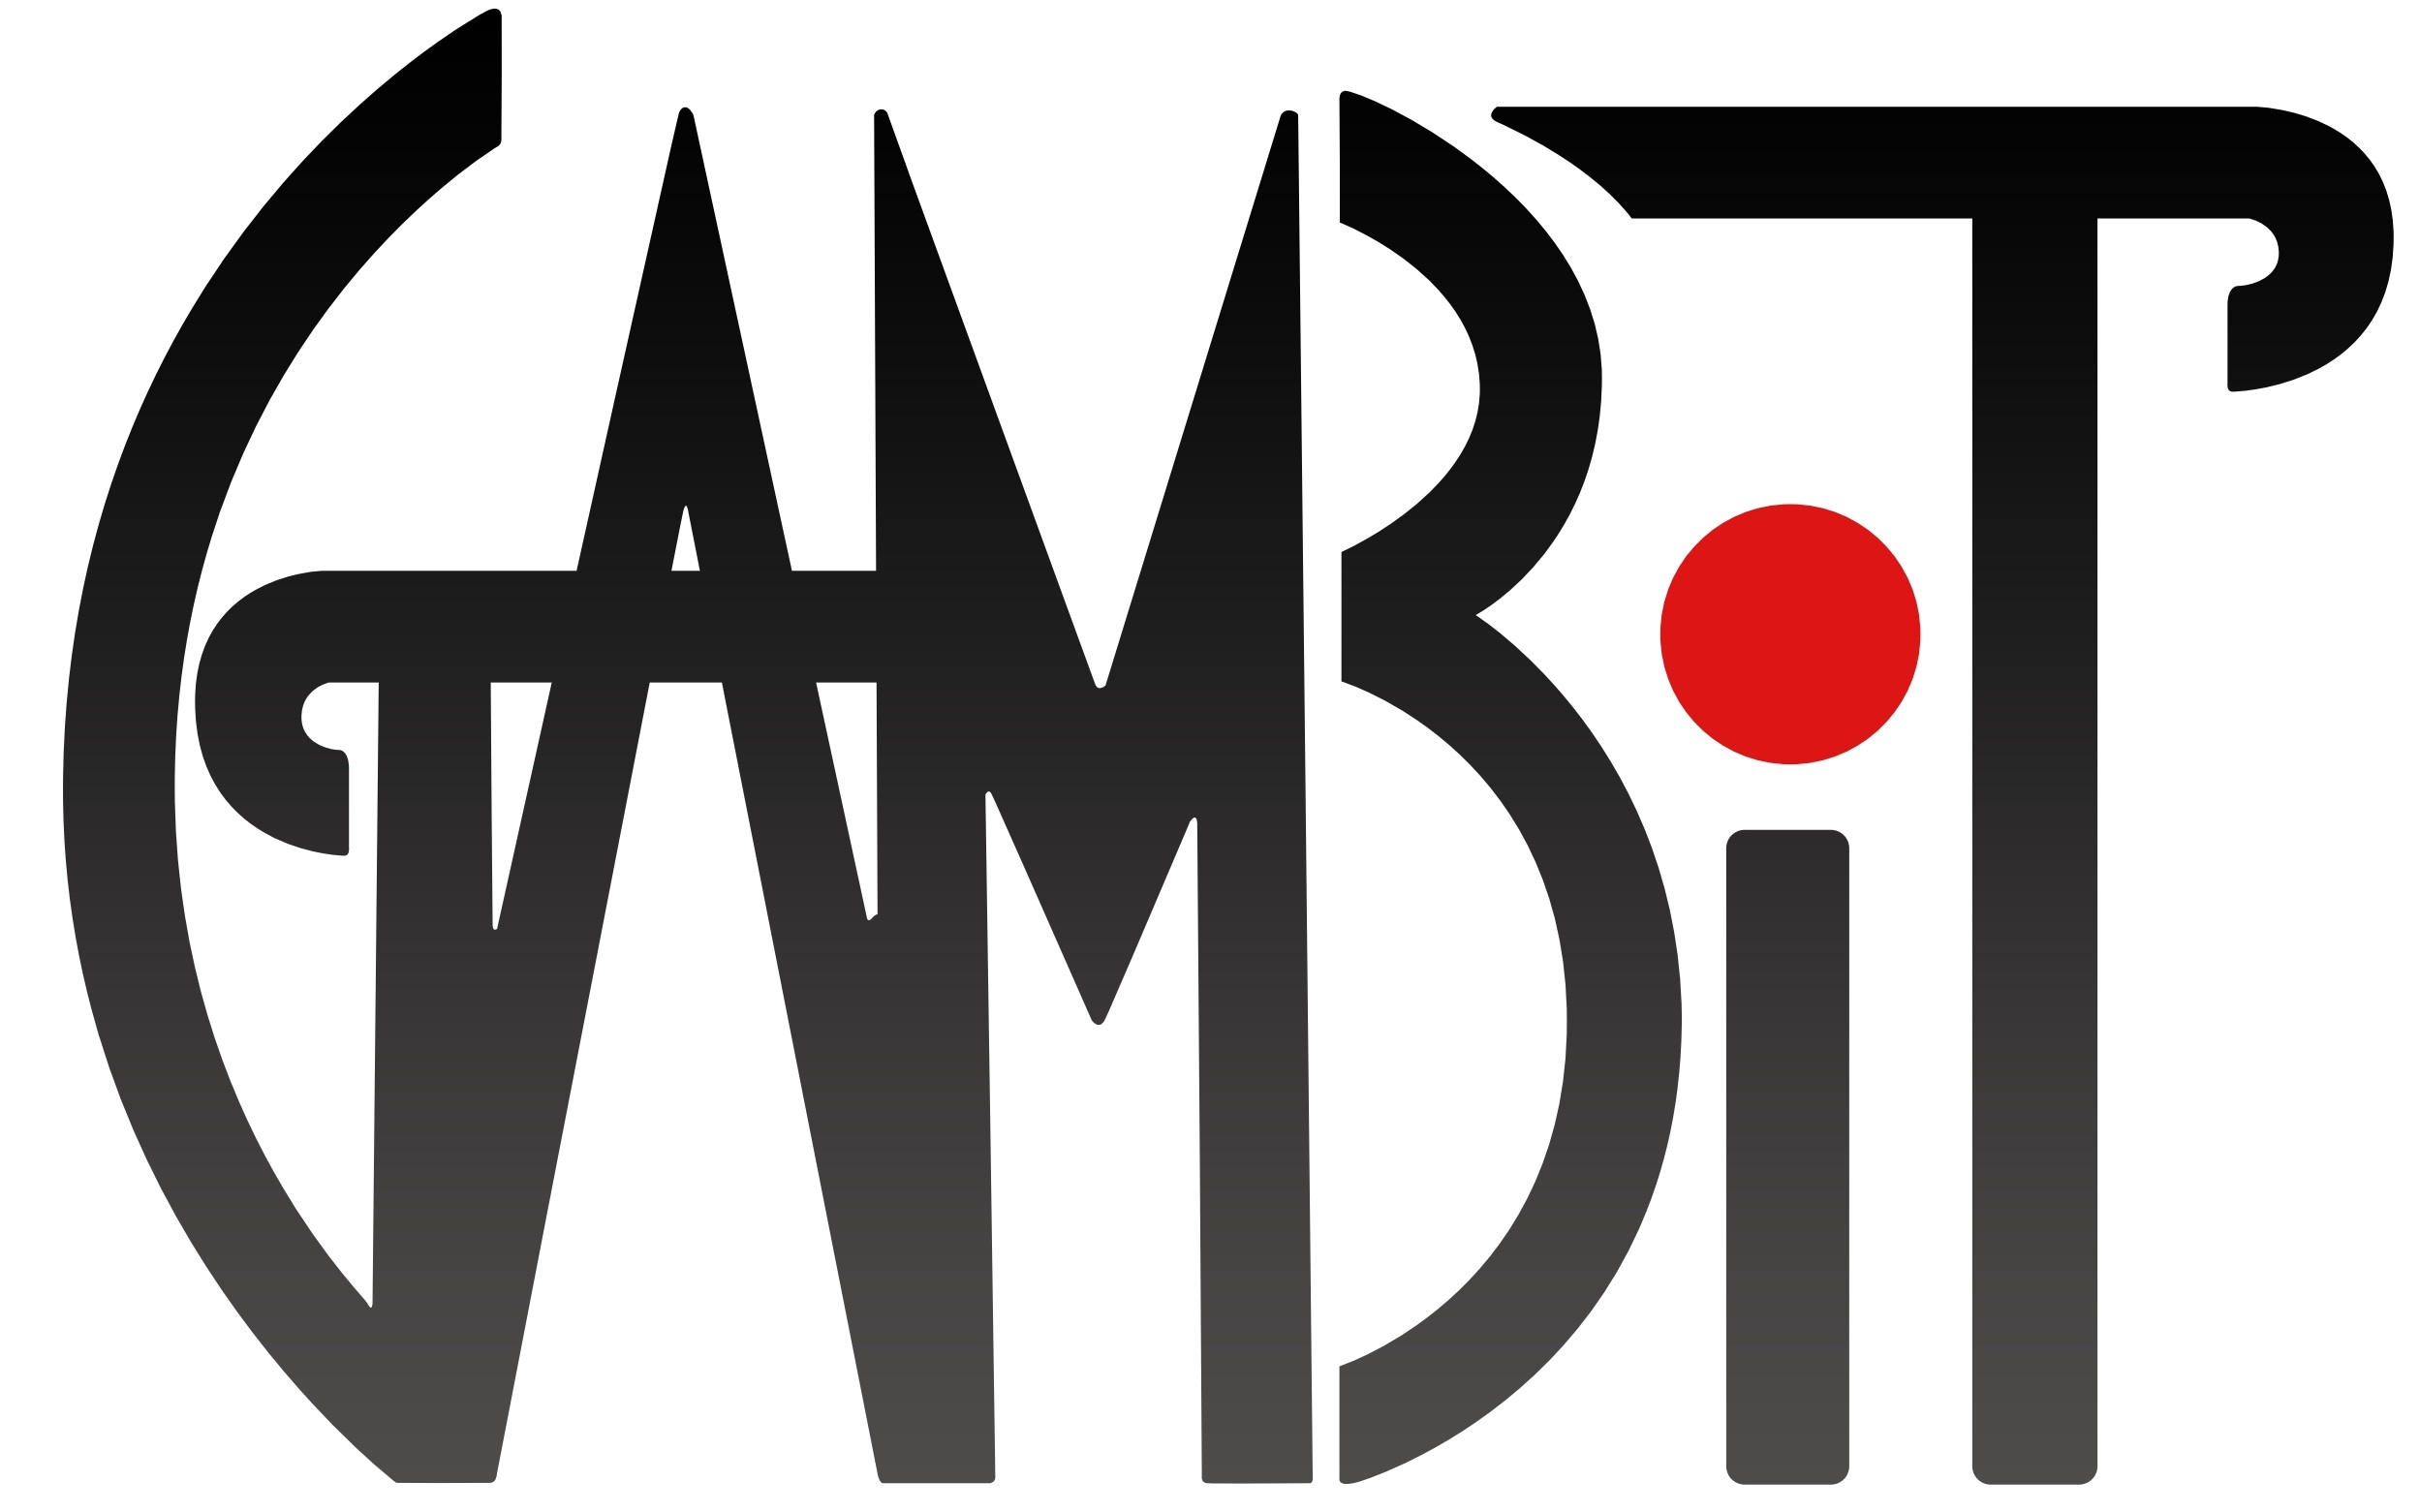 GAMBIT Logo.jpg fb3ef4d4d83afd7079bb64fea72067bf